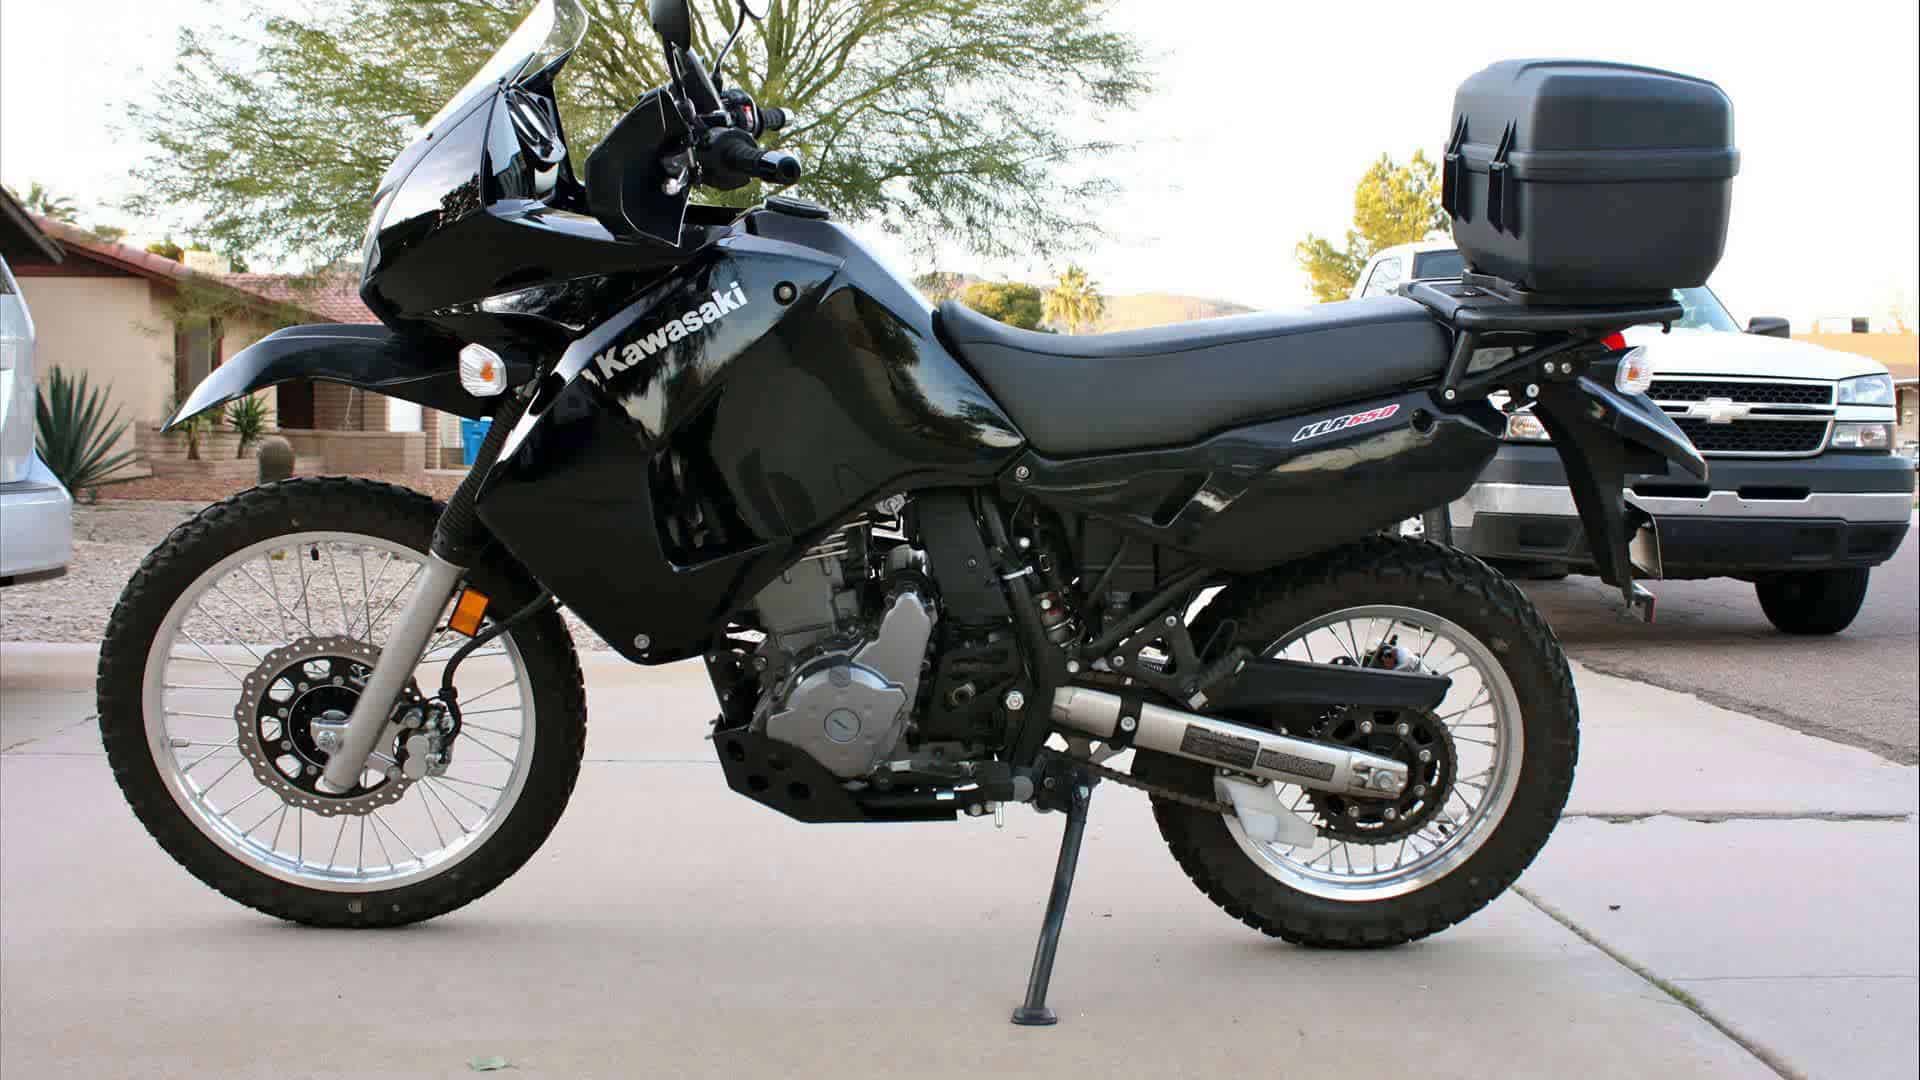 Kawasaki KLR650 - dual sport motorcycle